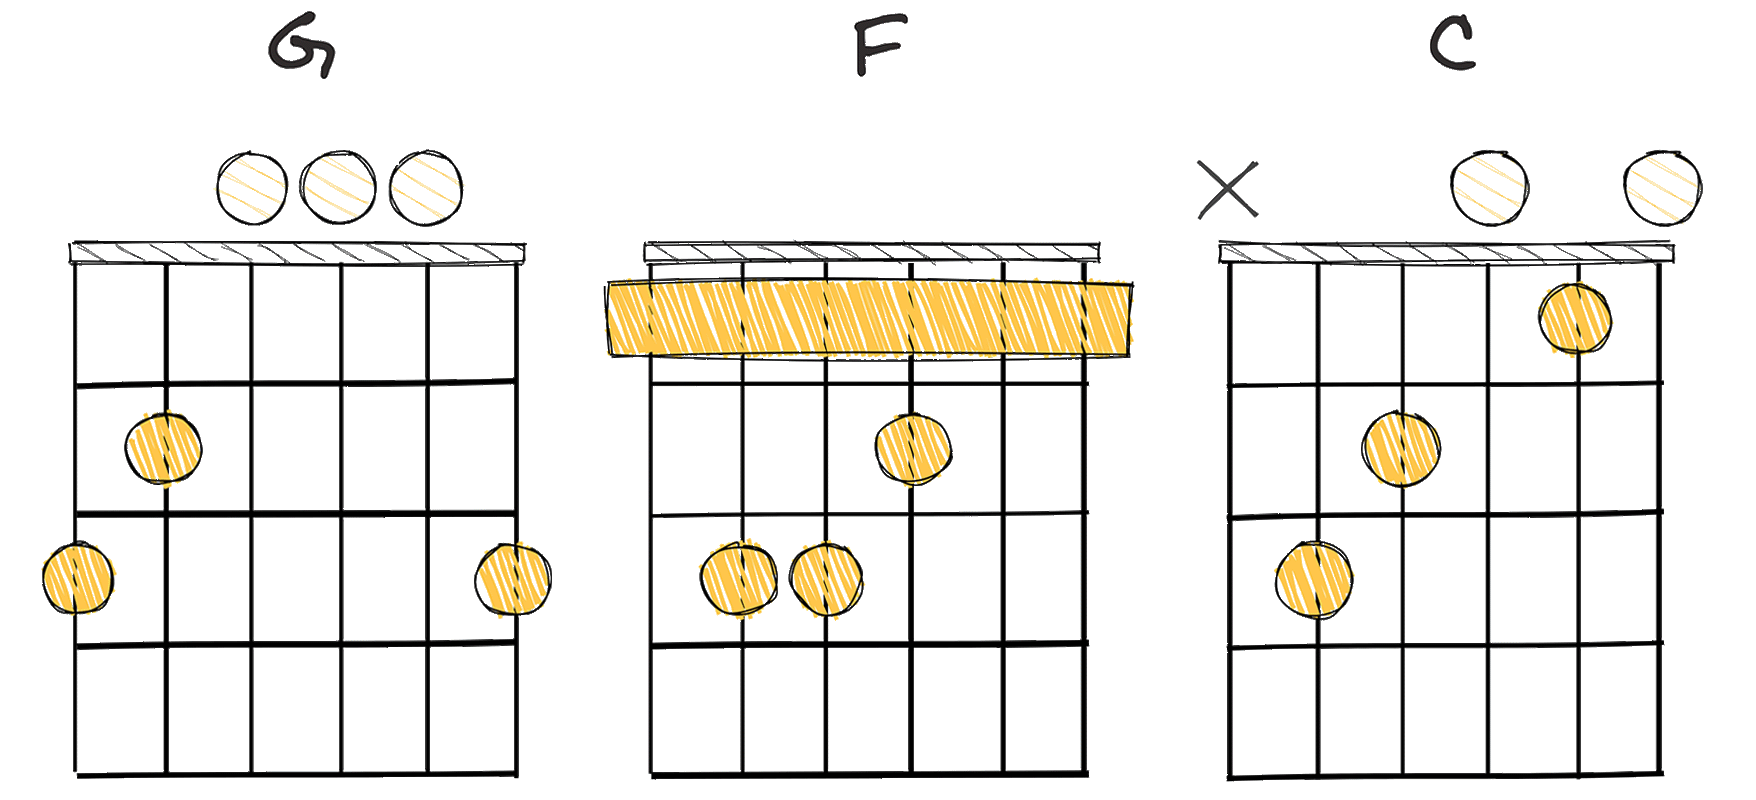 V - IV - I (5 - 4 - 1) chords diagram